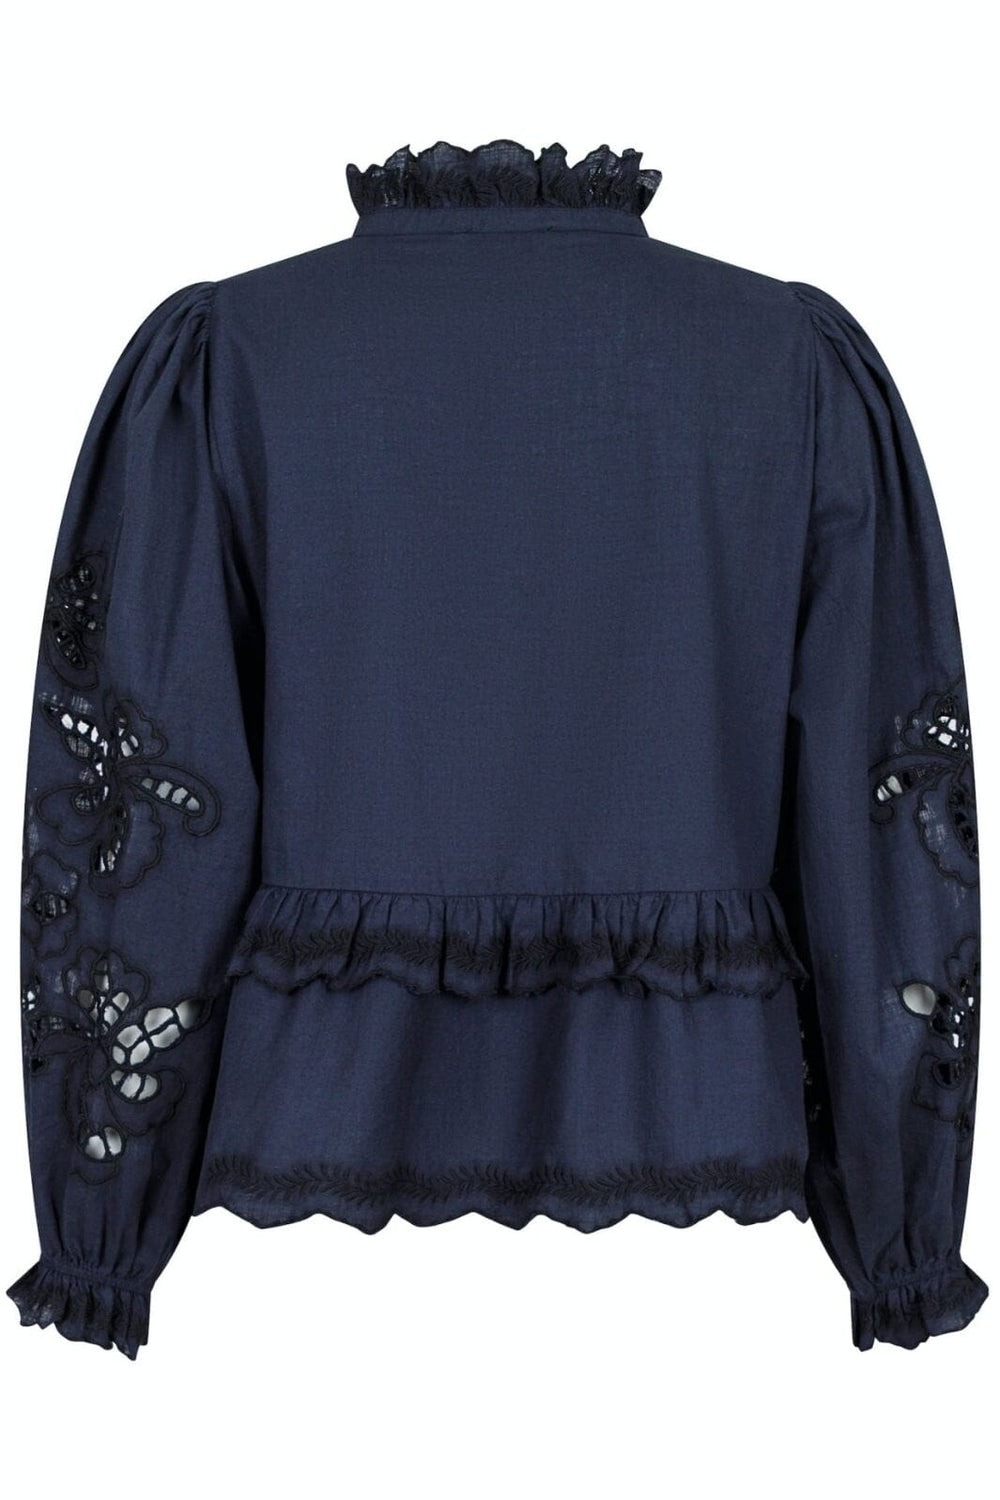 Neo Noir - Kimmo Embroidery Blouse - Navy Skjorter 